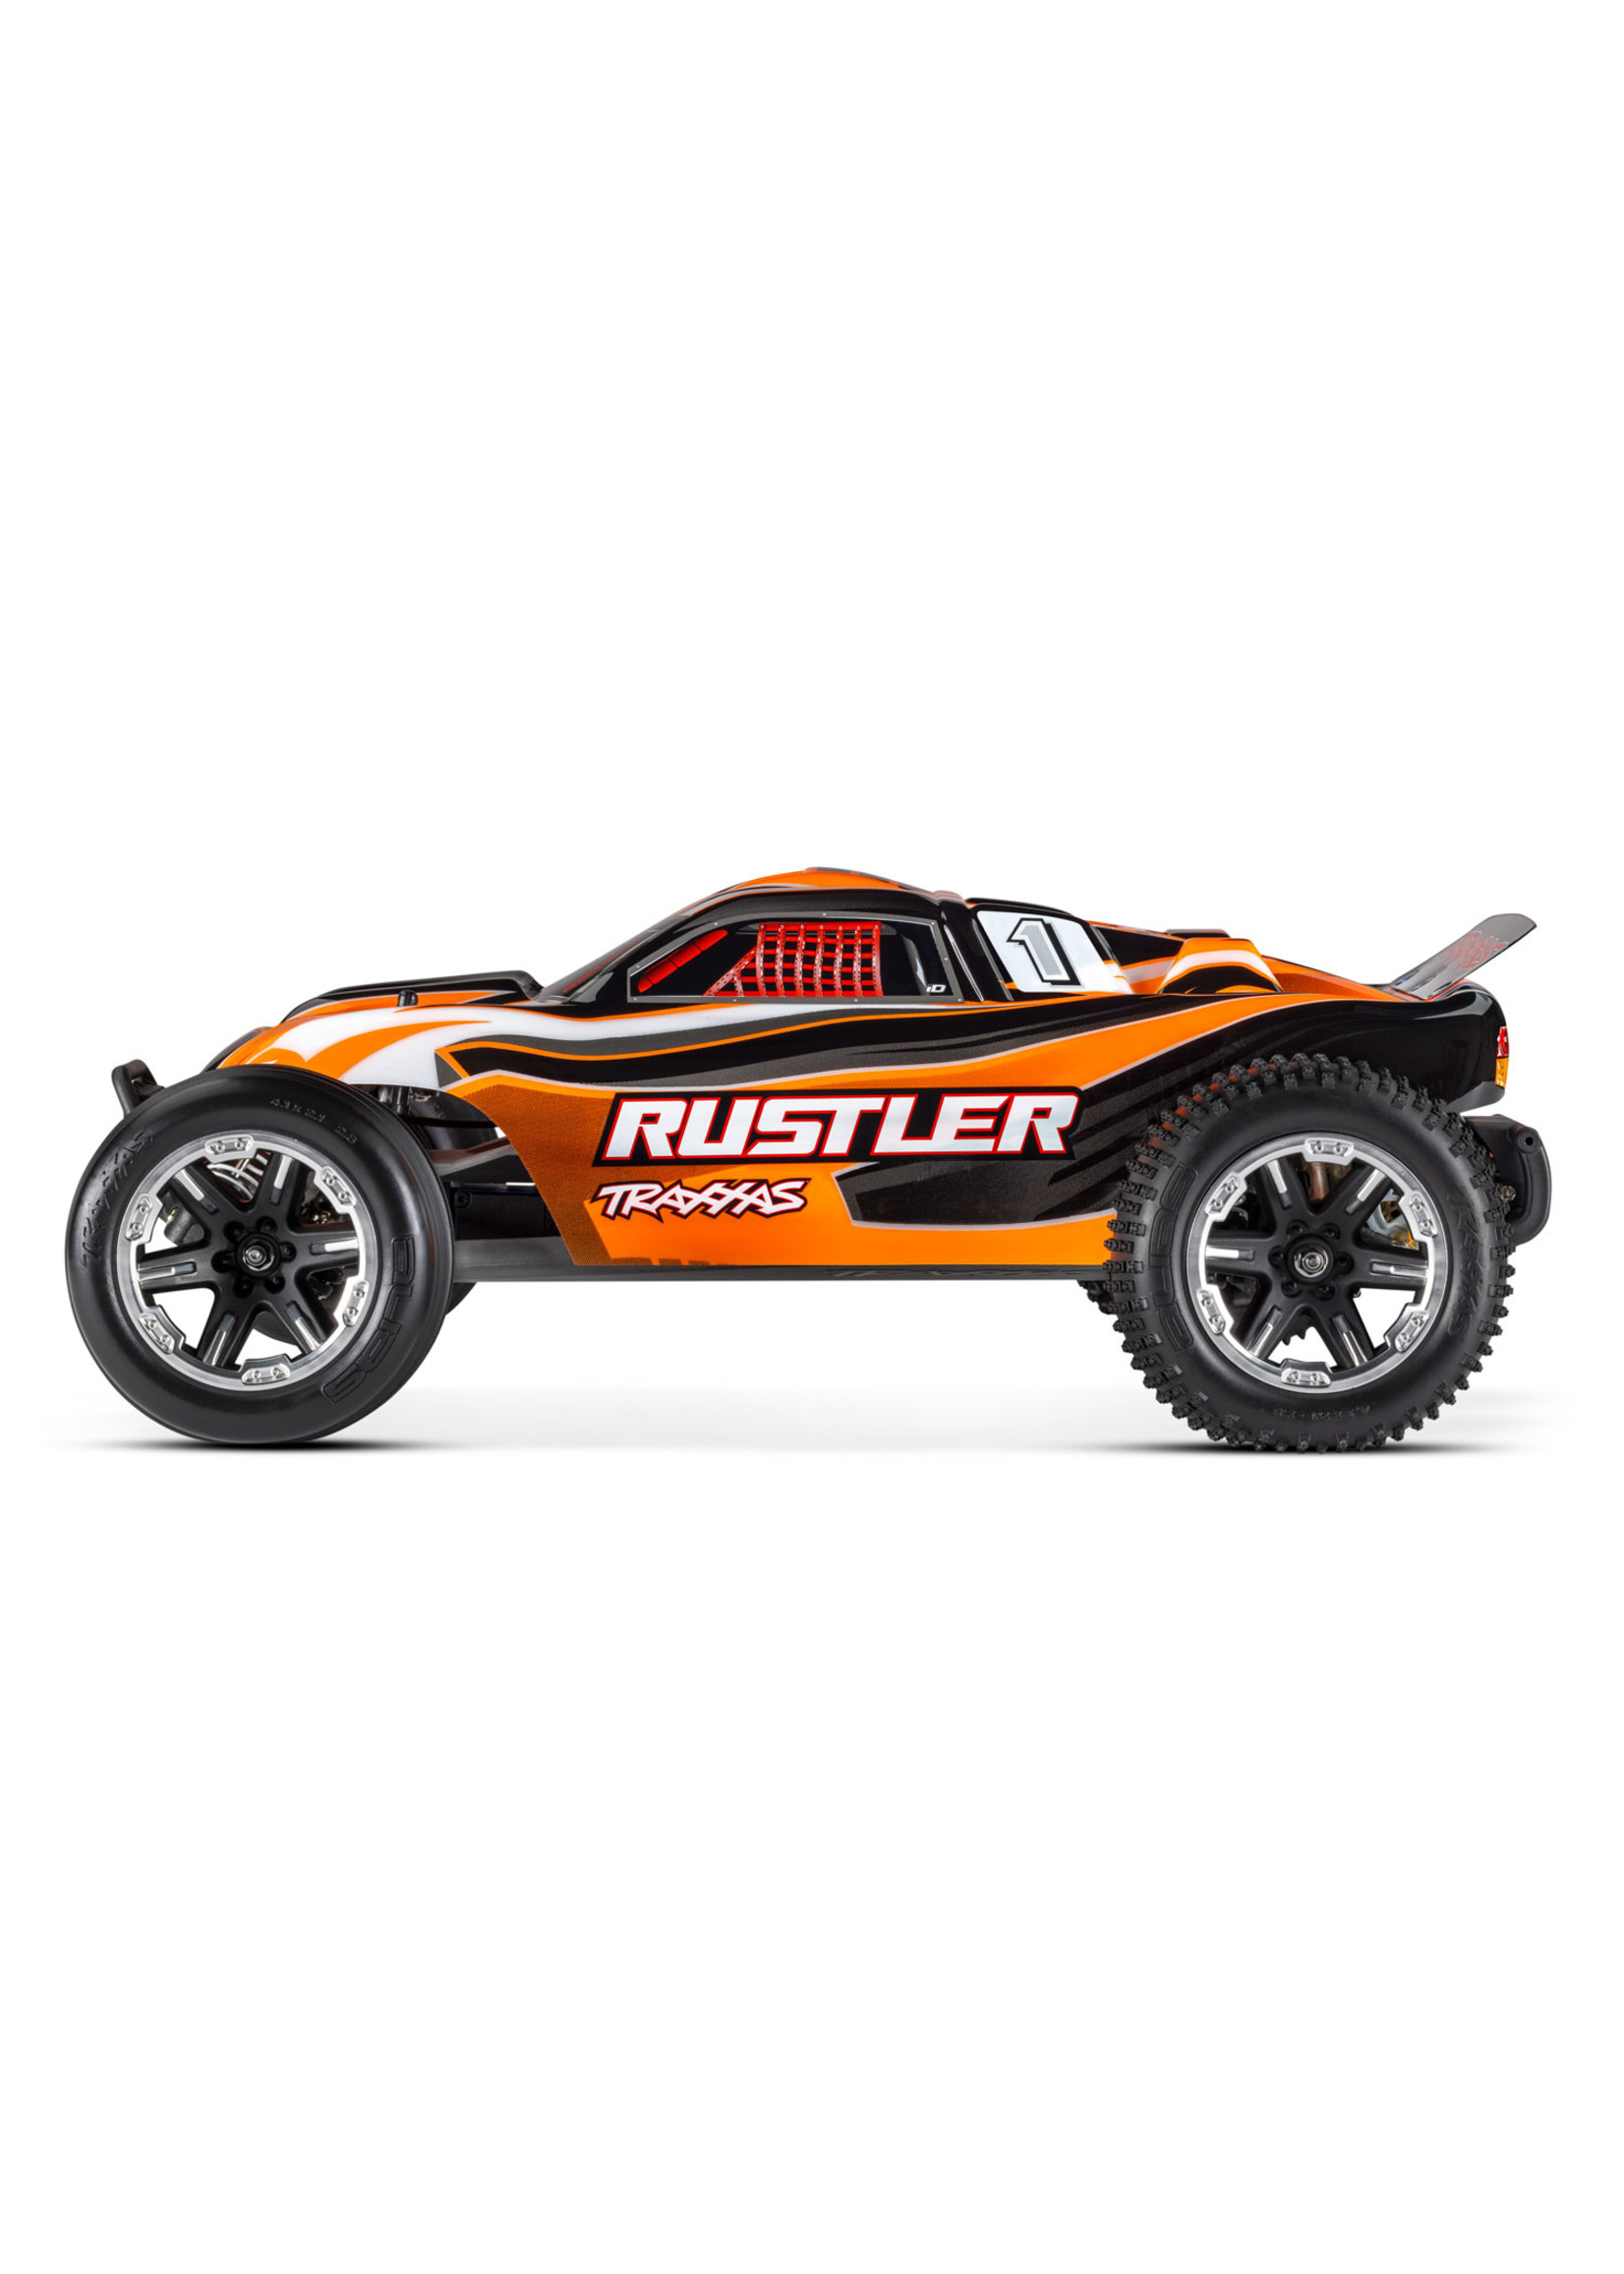 Traxxas 1/10 Rustler 2WD RTR Stadium Truck with Lights - Orange